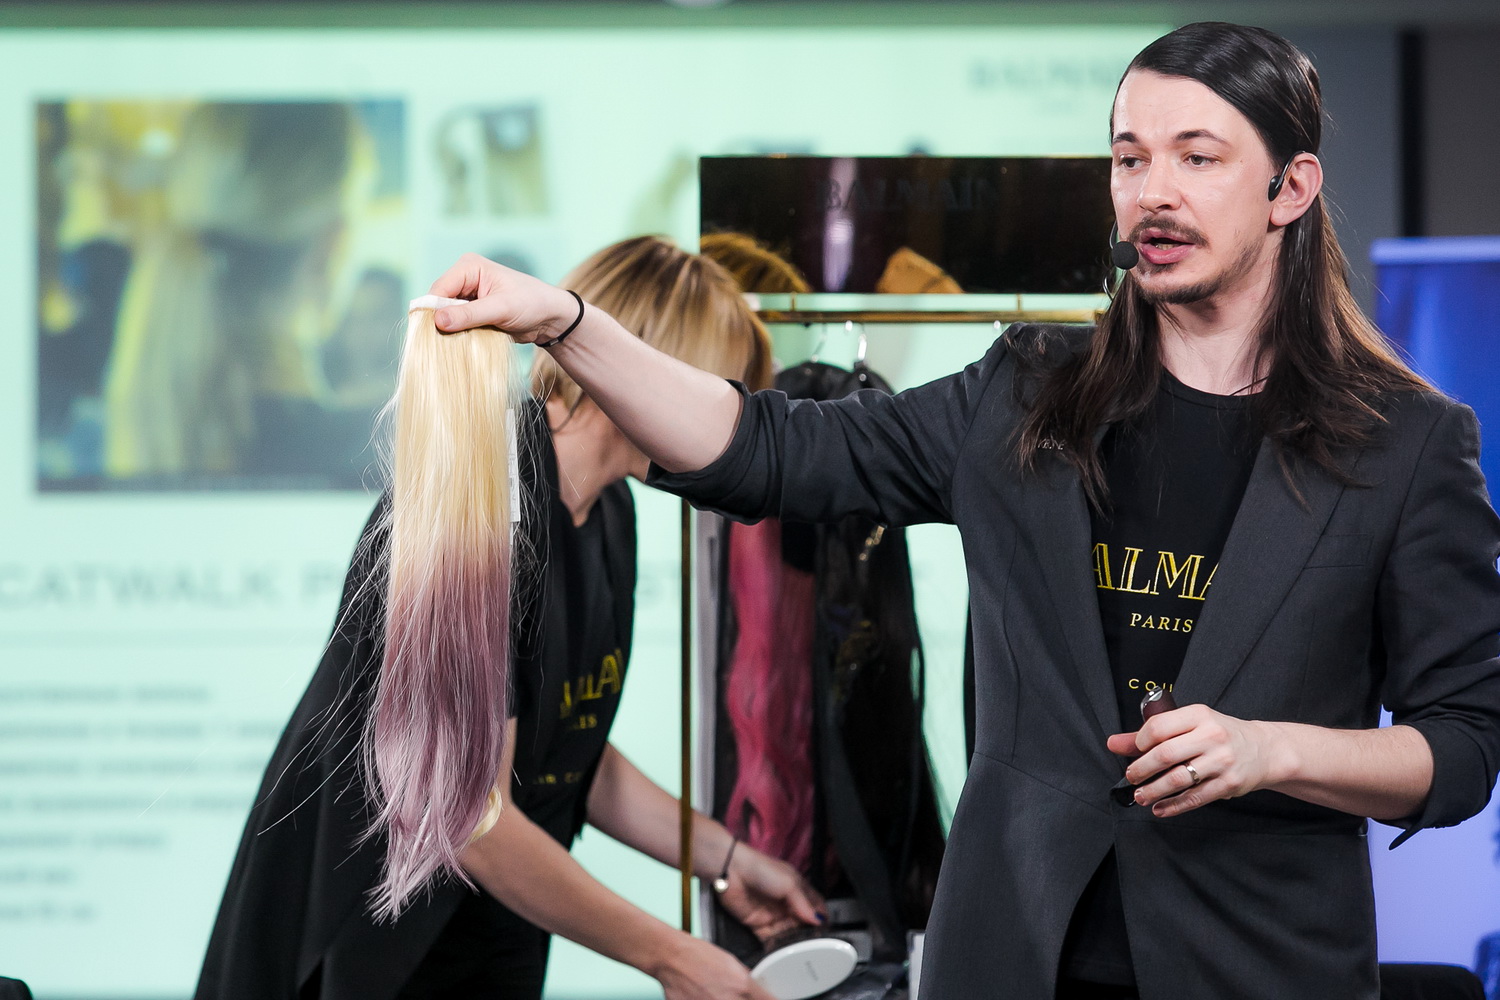 Events: презентация бренда BALMAIN HAIR в России «Женщины с волосами HAUTE COUTURE»